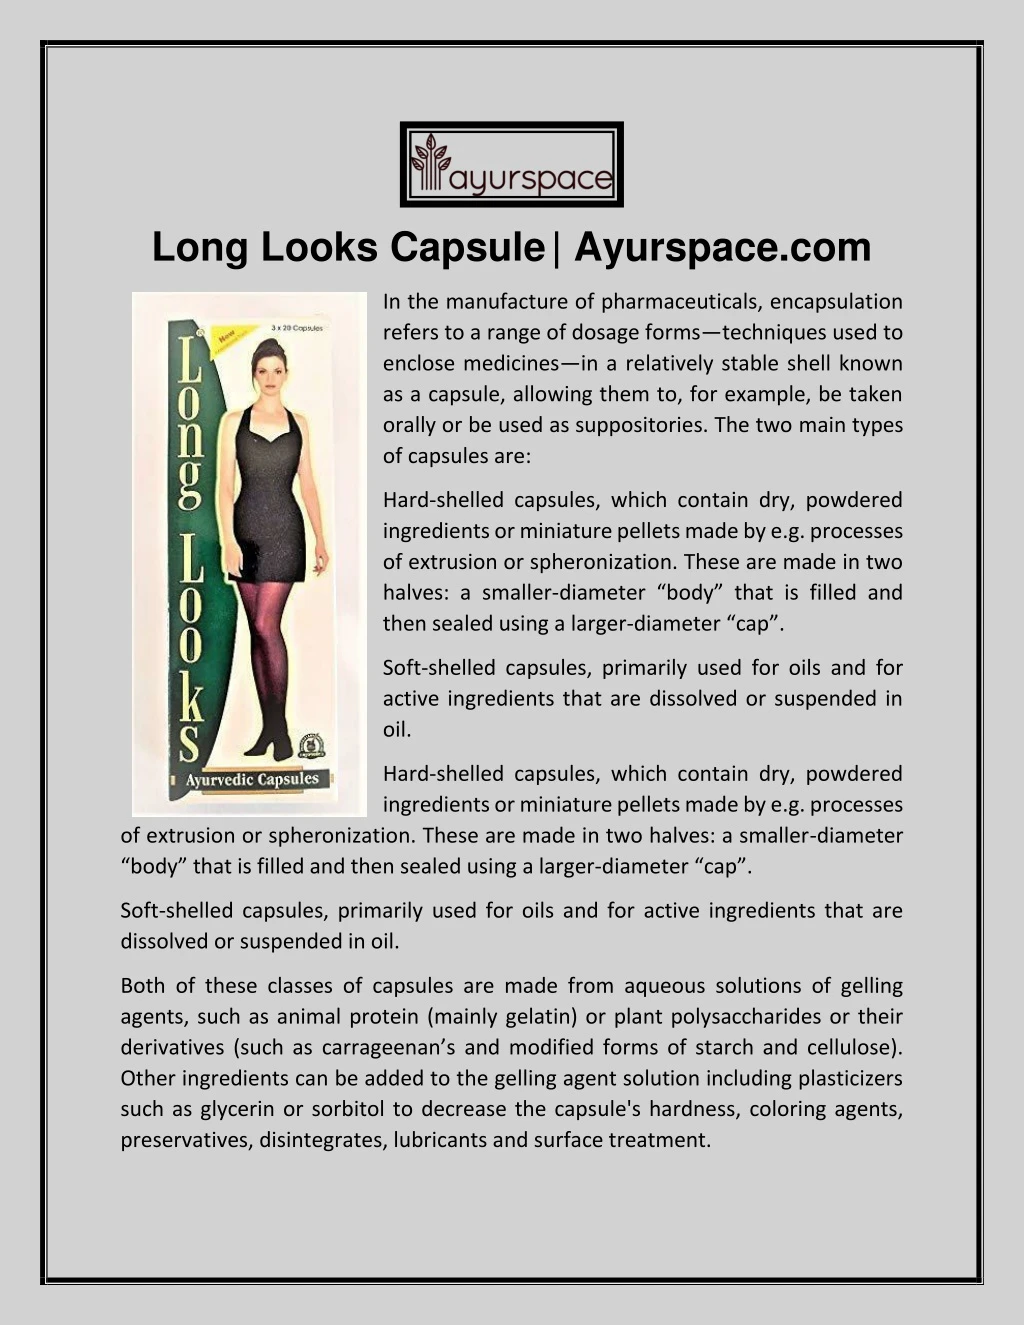 long looks capsule ayurspace com